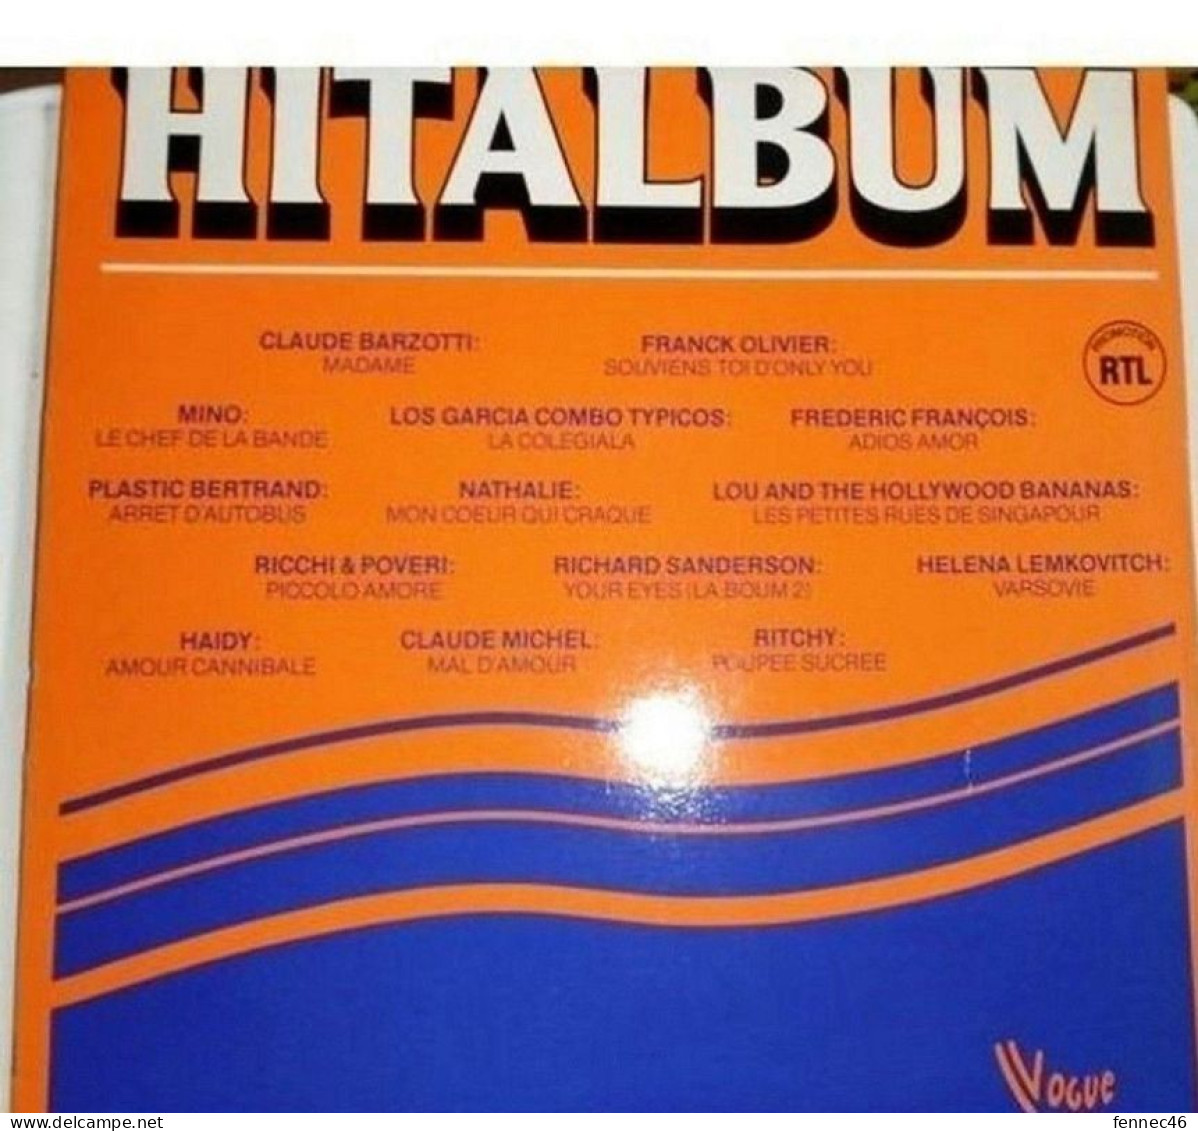 * Vinyle - 33t - HITALBUM (Claude BARZOTTI, Claude MICHEL, HAIDY,... - Otros - Canción Francesa